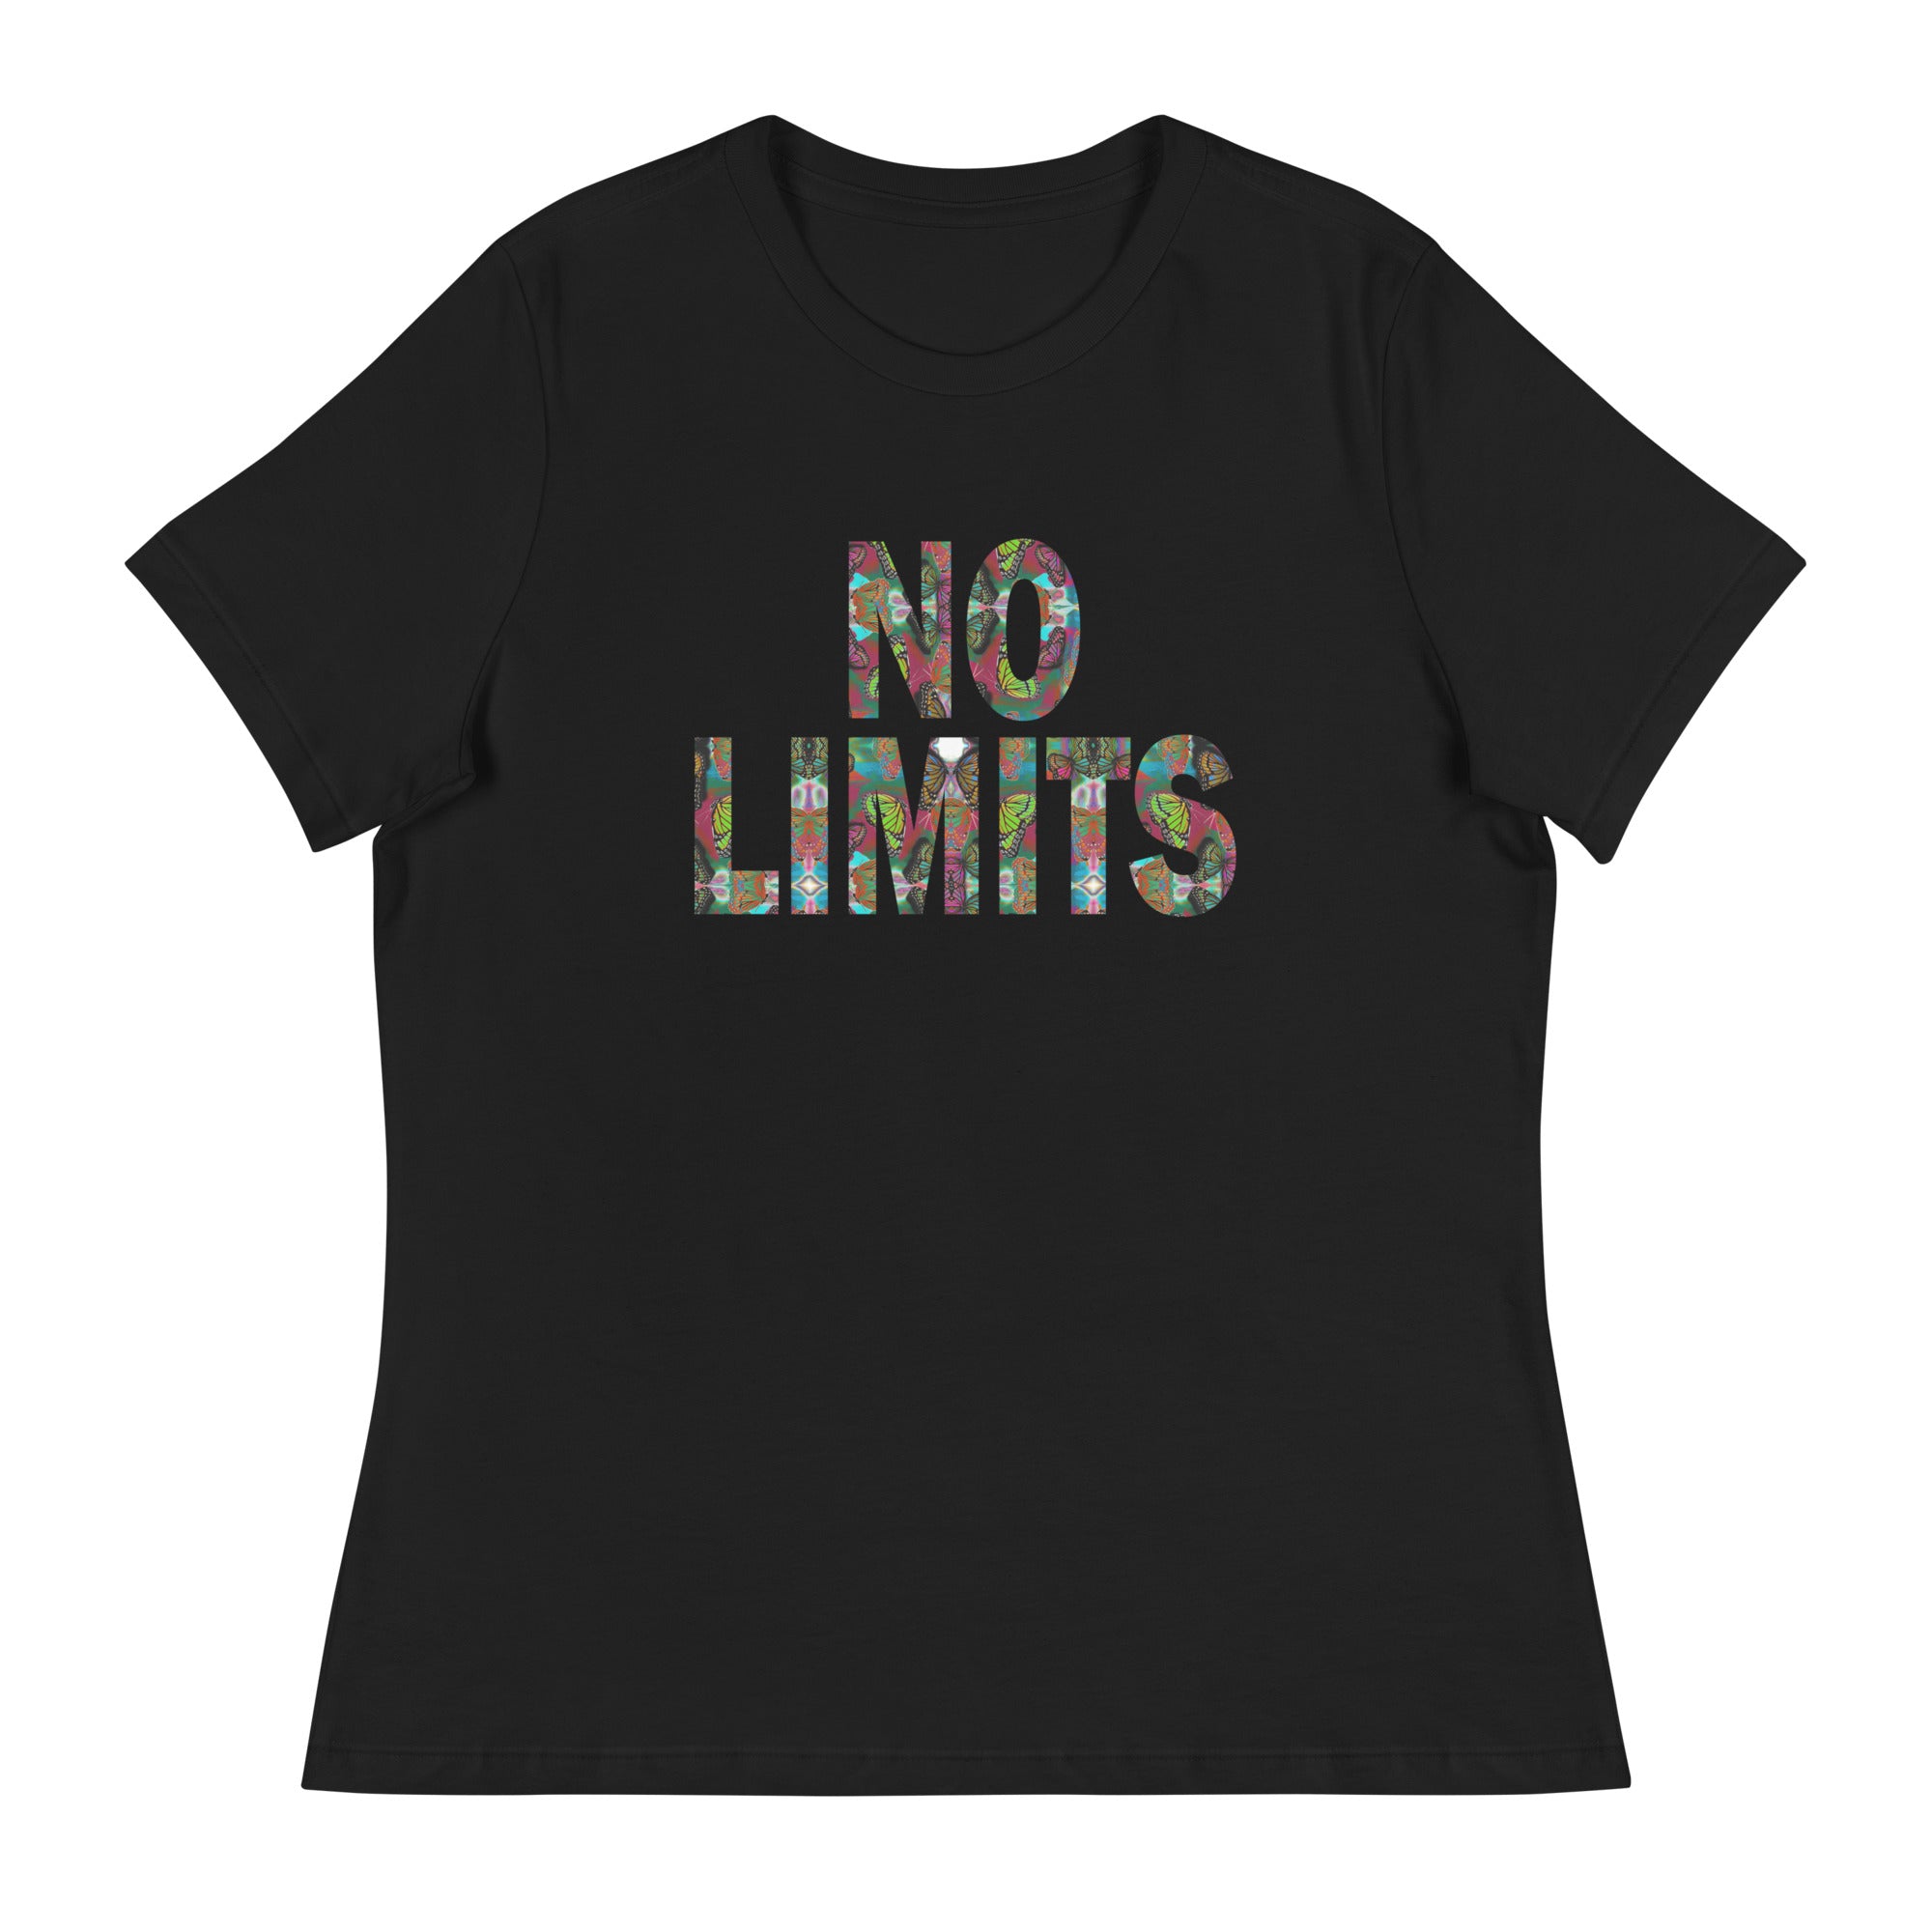 NO LIMITS ~ Women's Graphic T-Shirt, Butterfly Word Art Short Sleeve Top